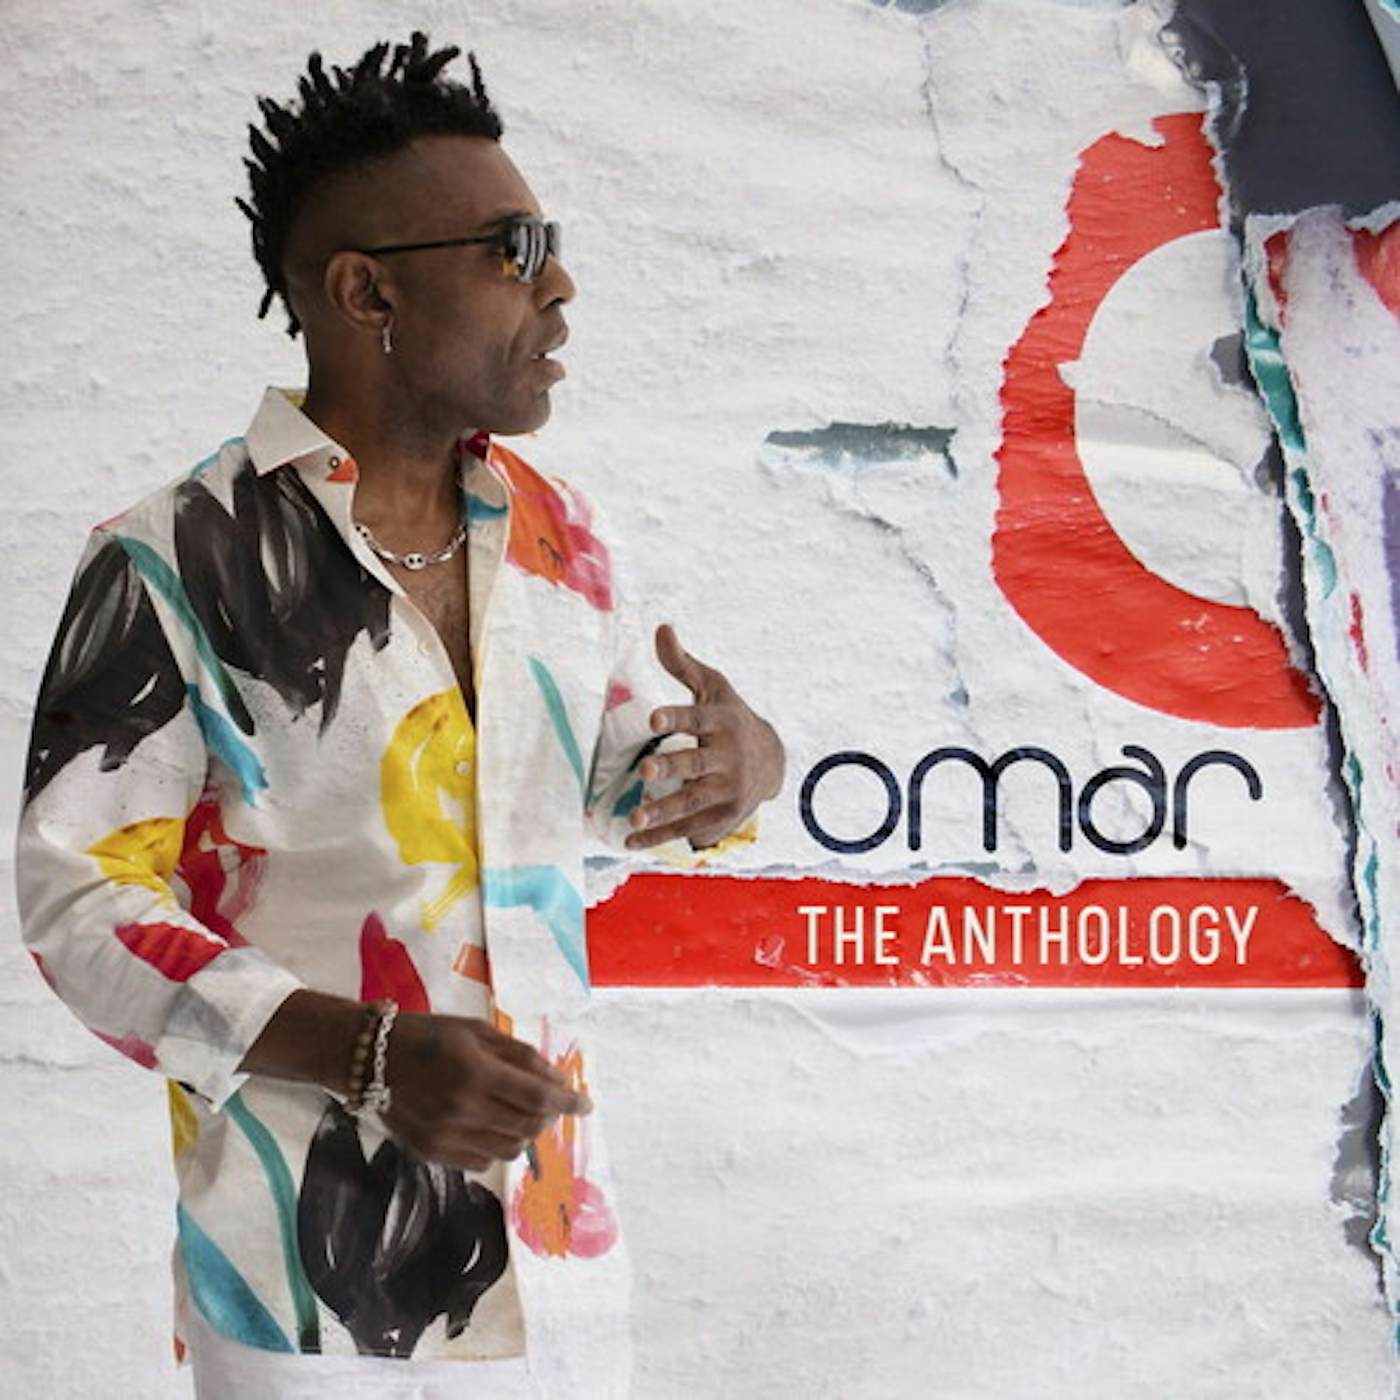 Omar ANTHOLOGY CD